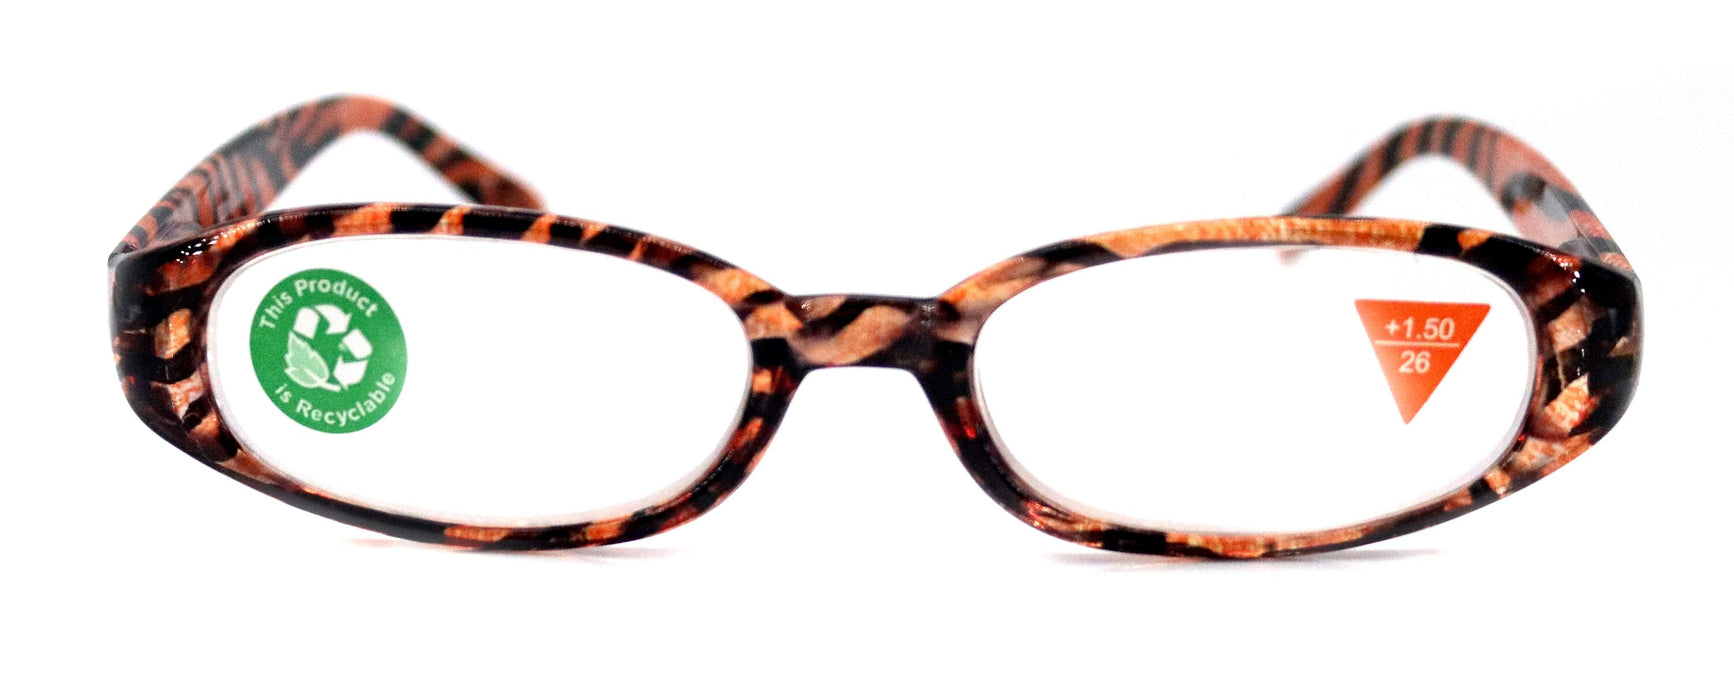 Isabella, (Premium) Reading Glasses, Fashion Reader (Orange Tiger) Animal Print, Oval +5 +6 High Magnification, NY Fifth Avenue (Wide Frame)